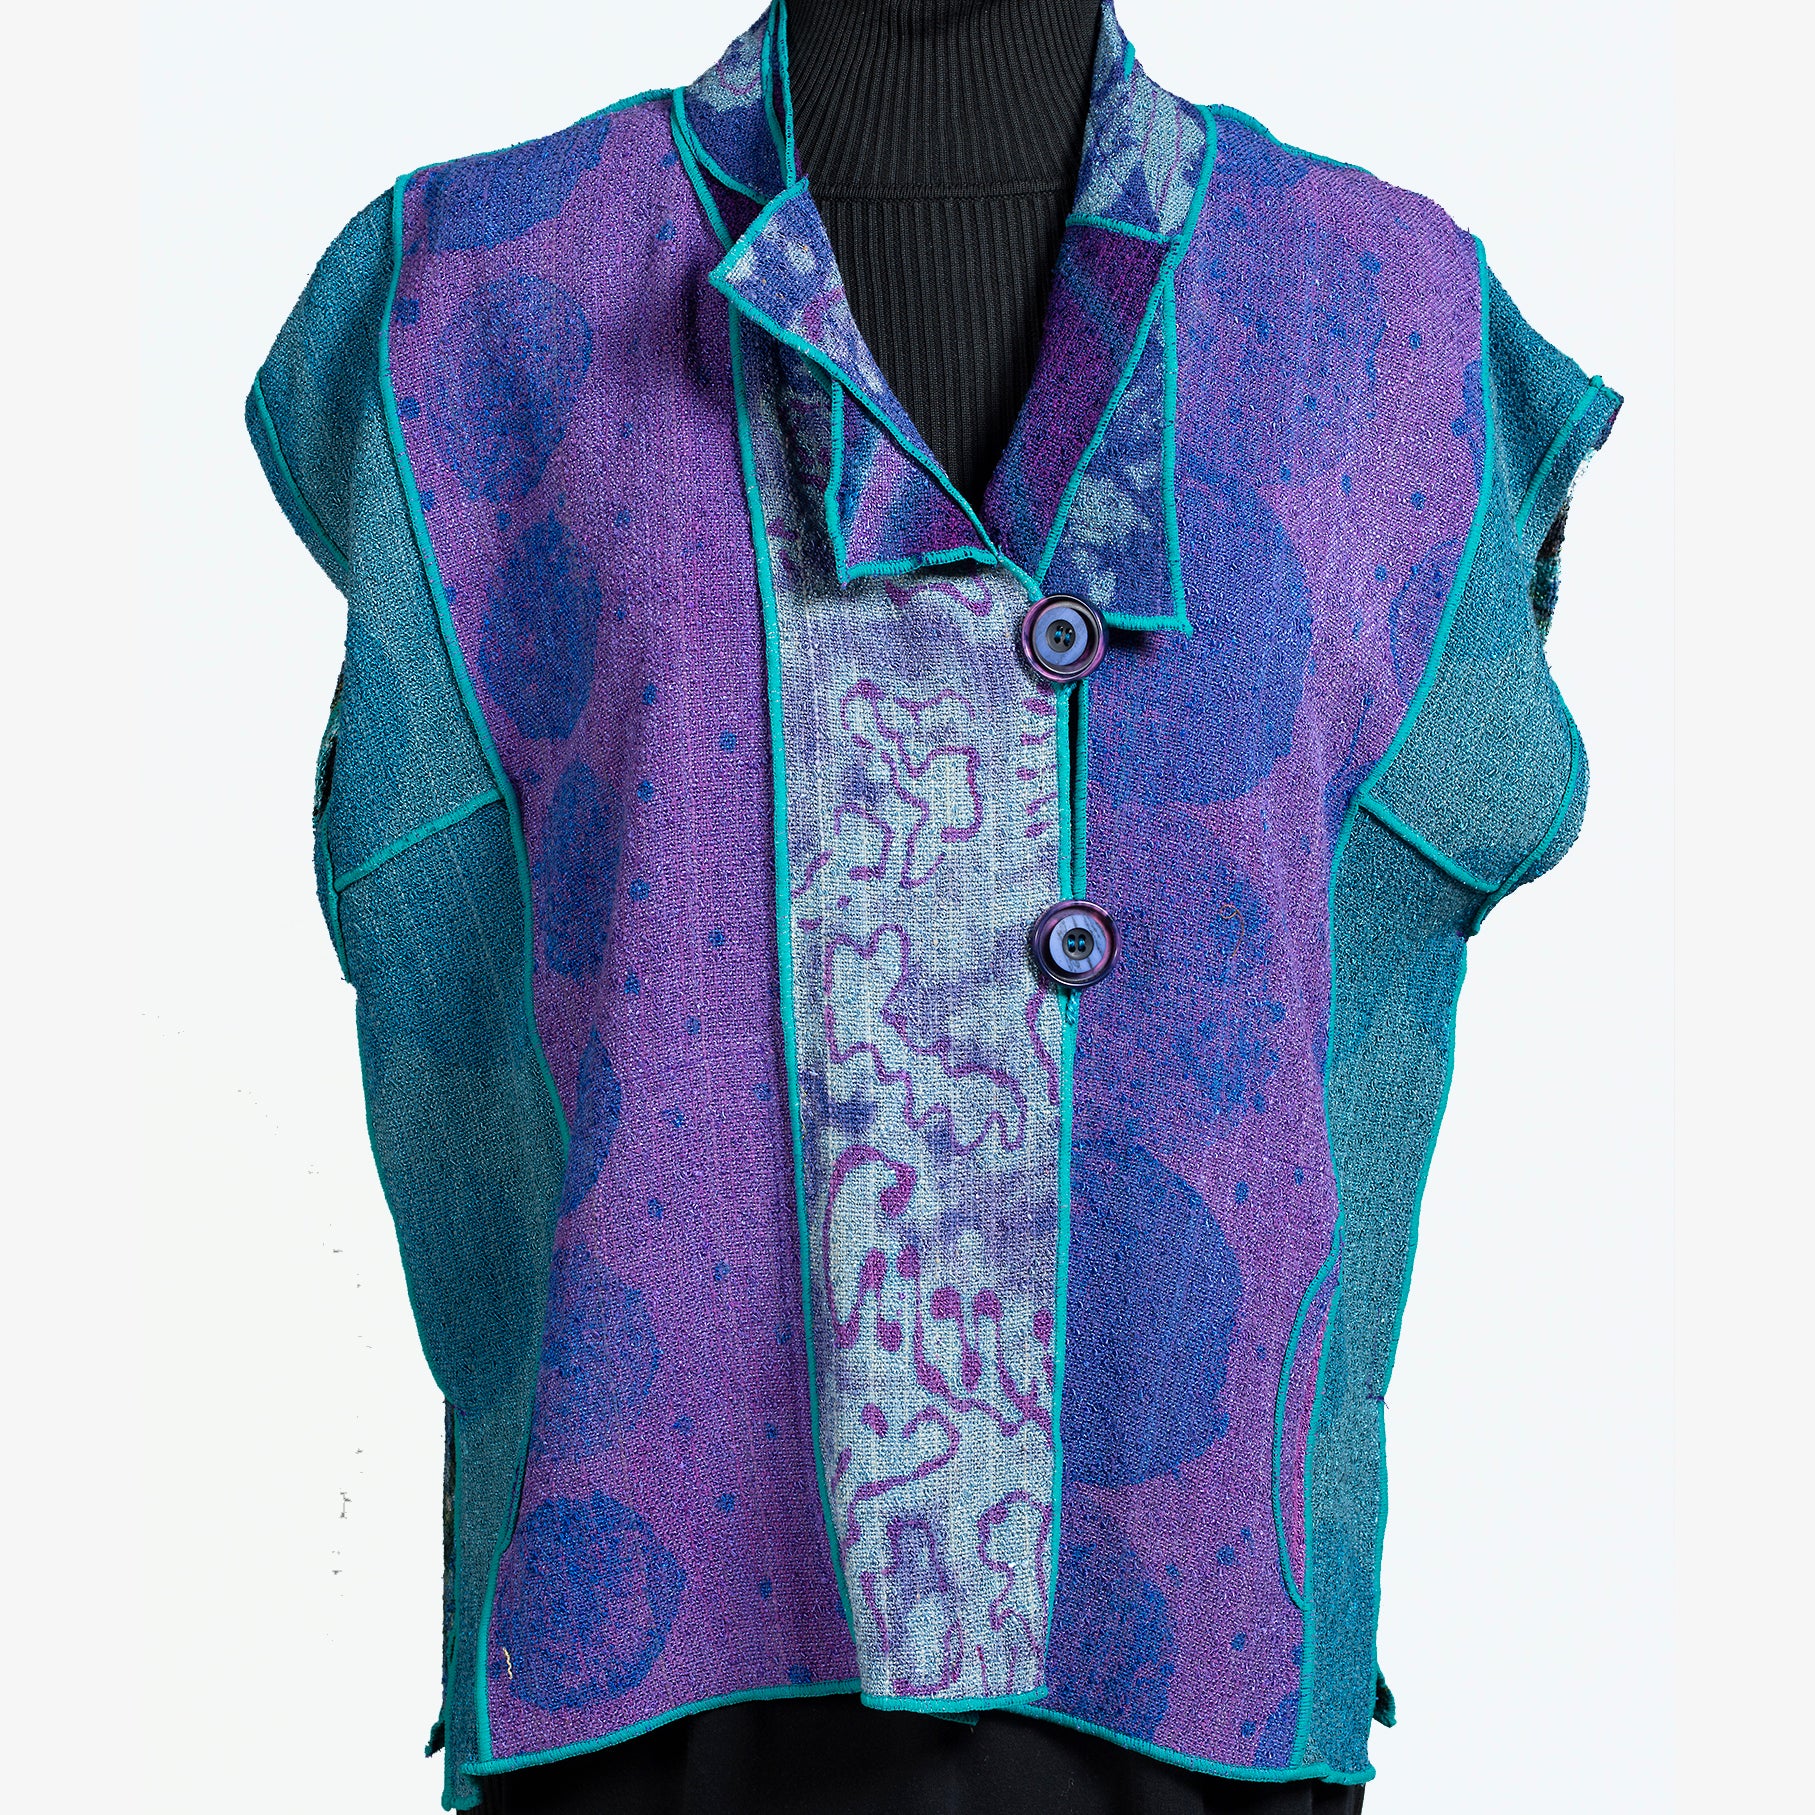 Judith Bird Vest, Short, Purple/Turquoise/Blue, S/M